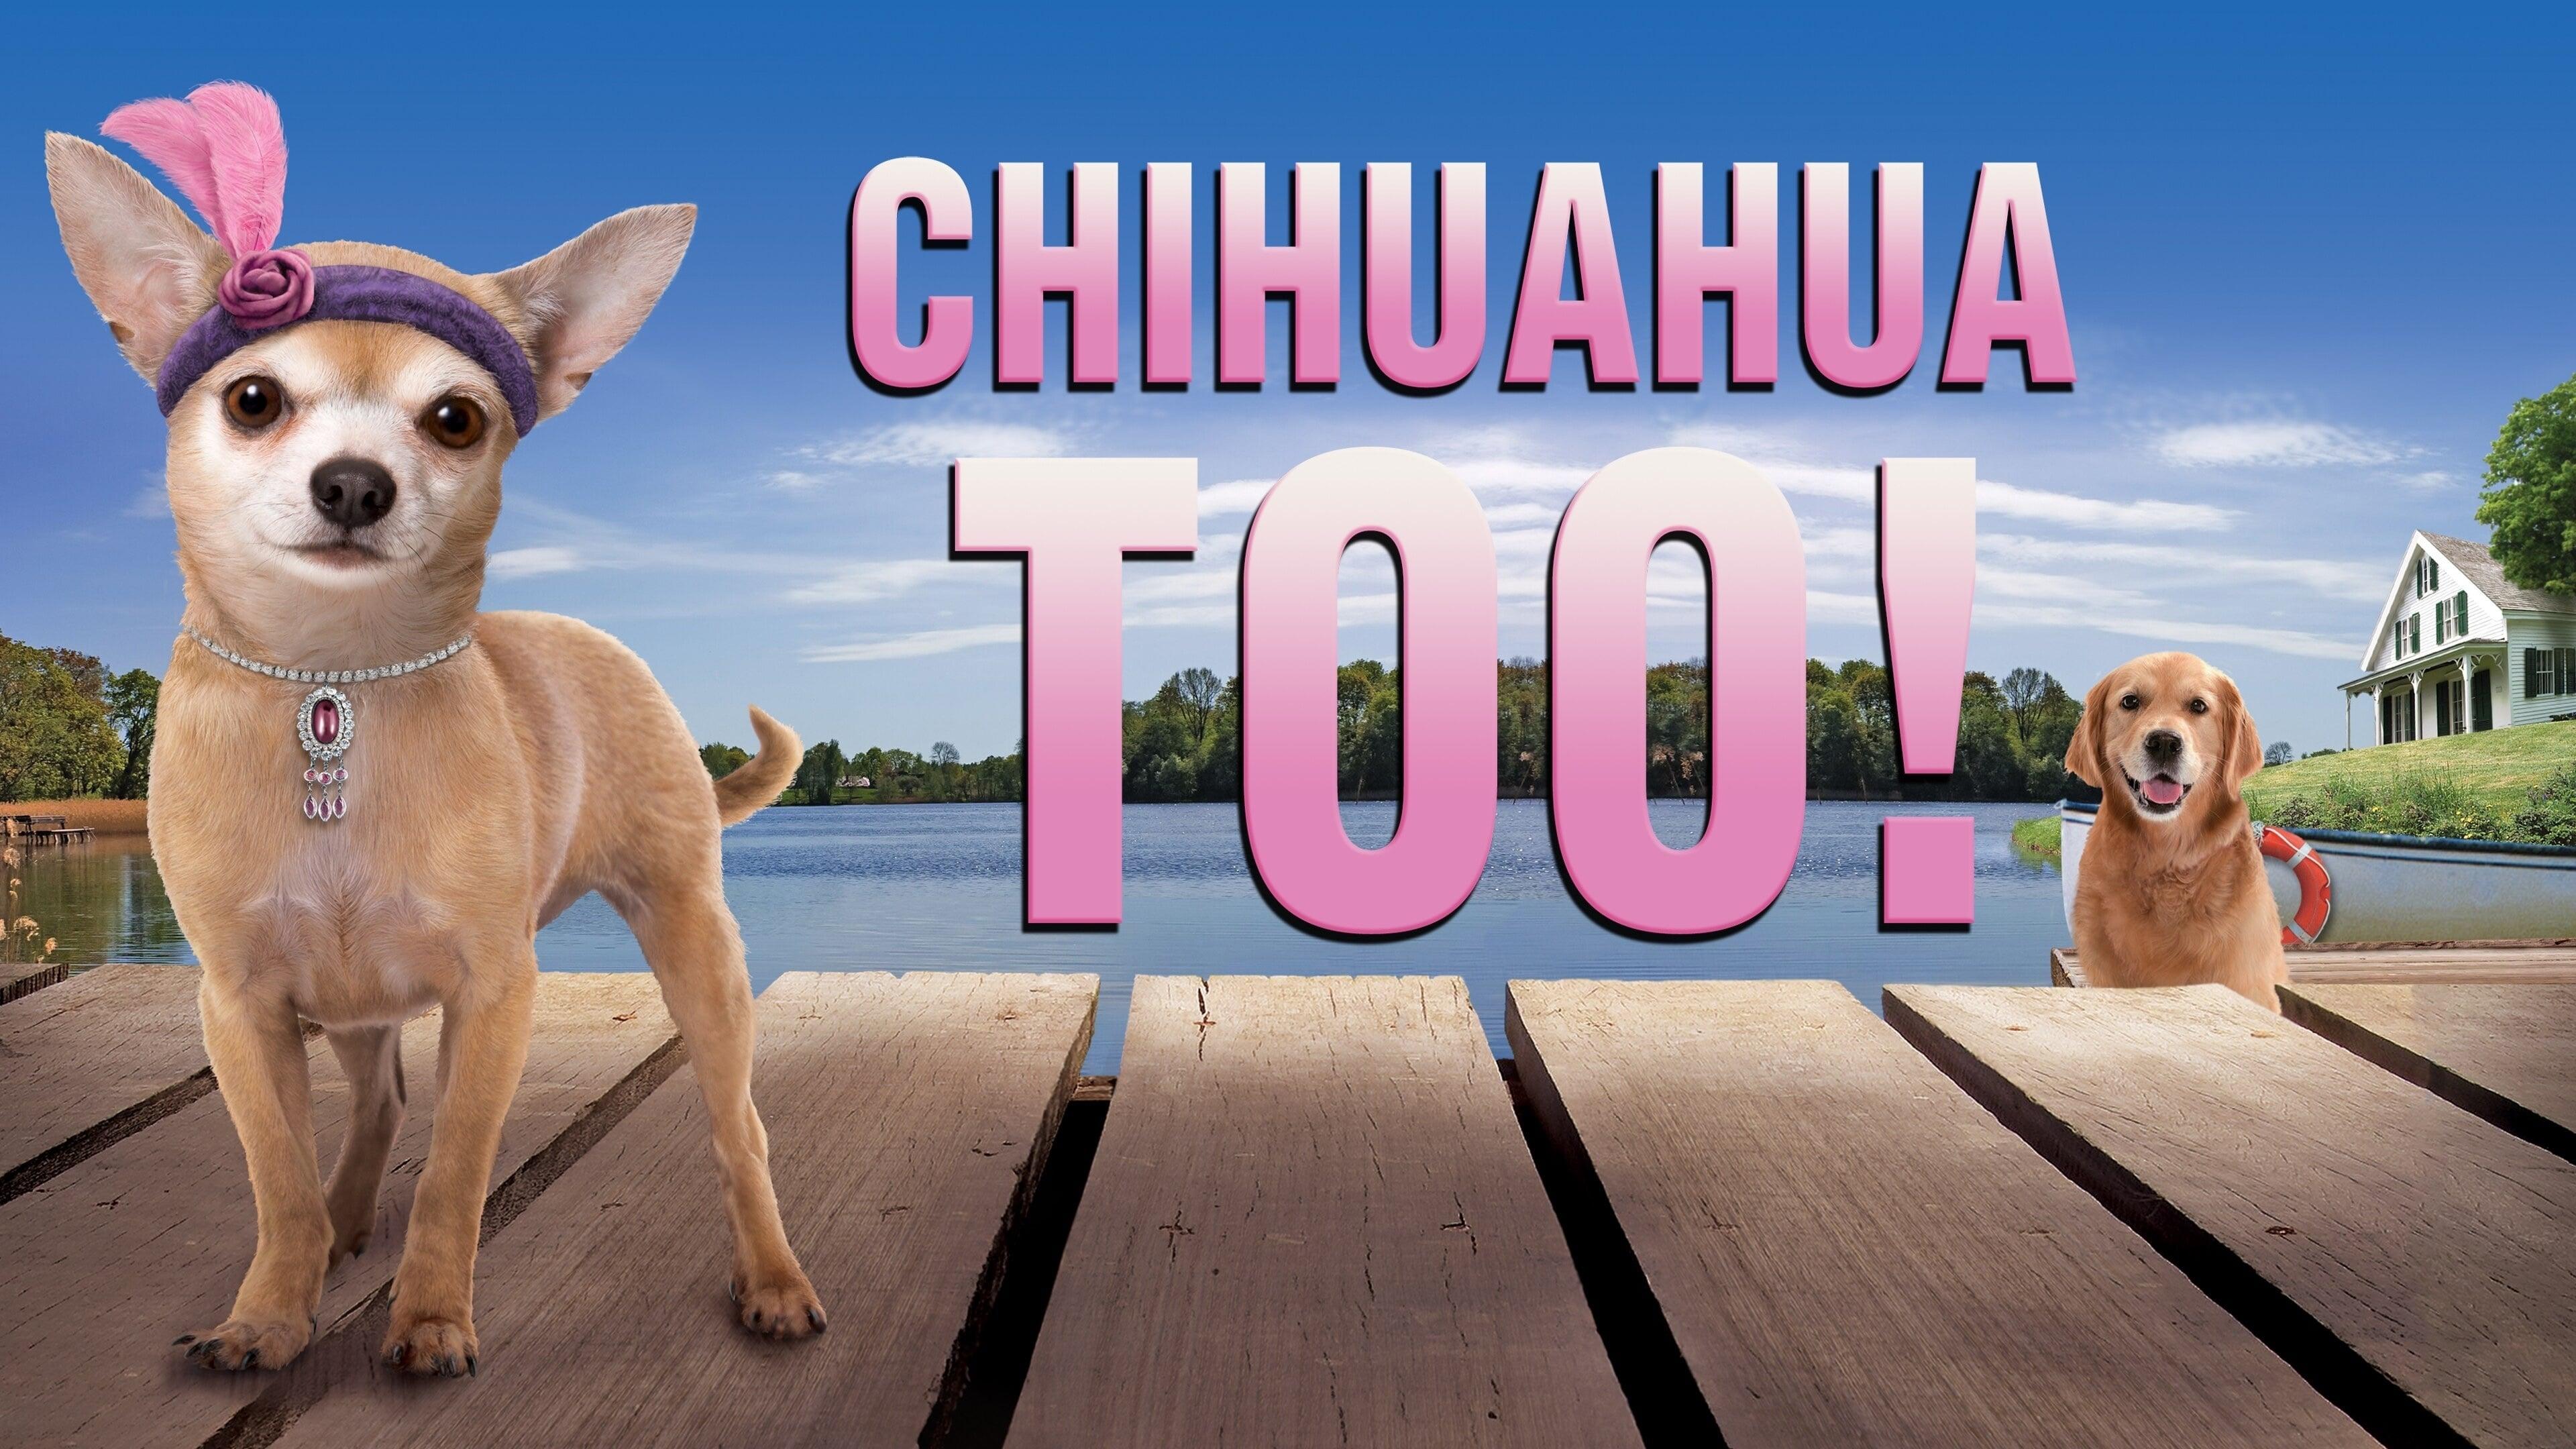 Chihuahua Too! backdrop